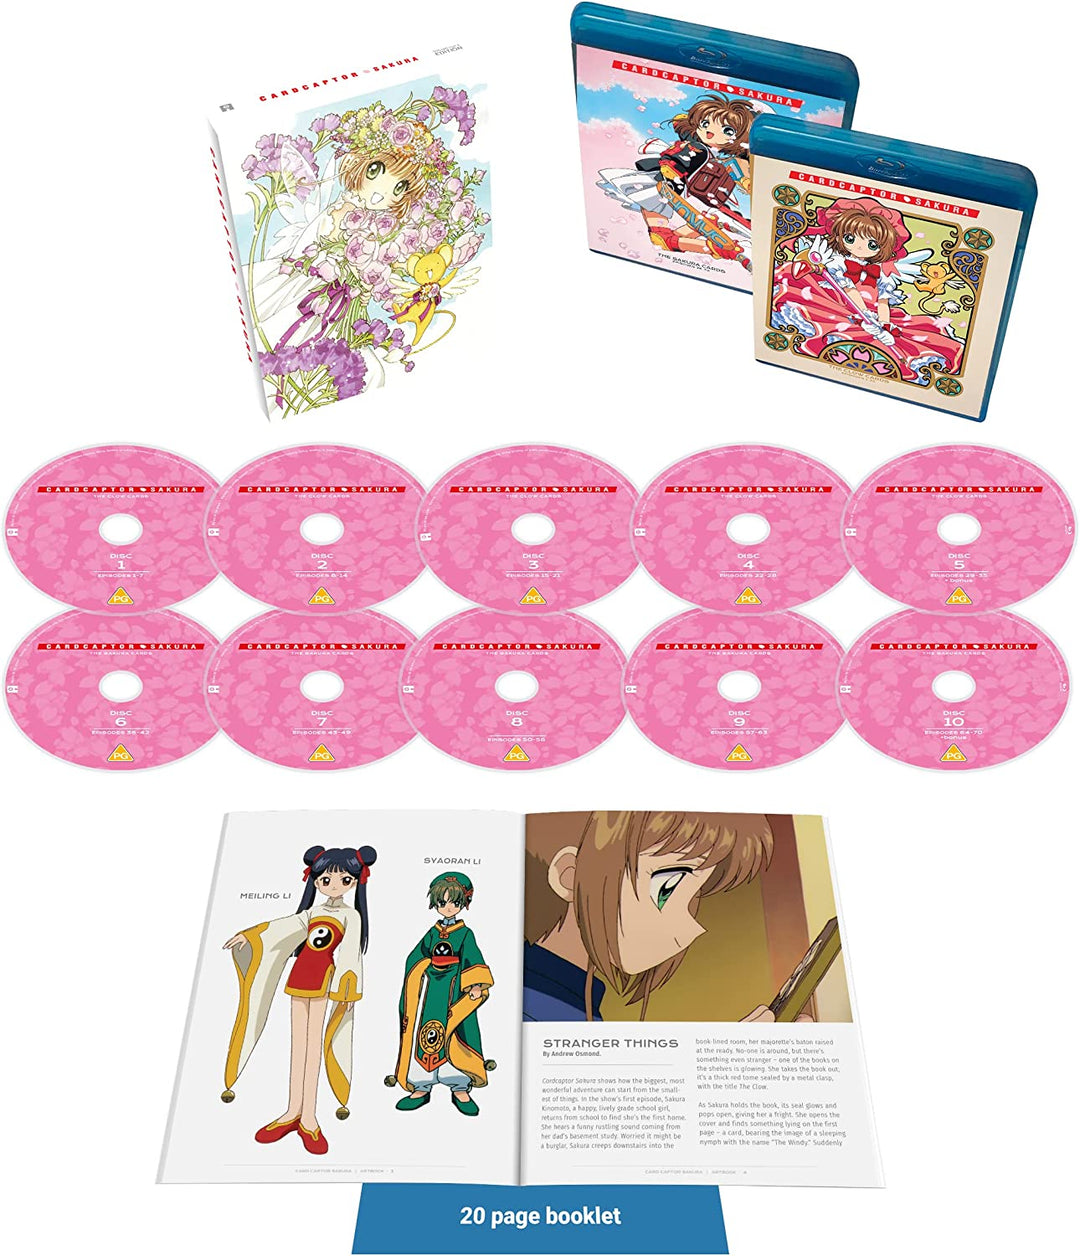 Cardcaptor Sakura TV Series (Collector's Limited Edition) [Blu-ray]